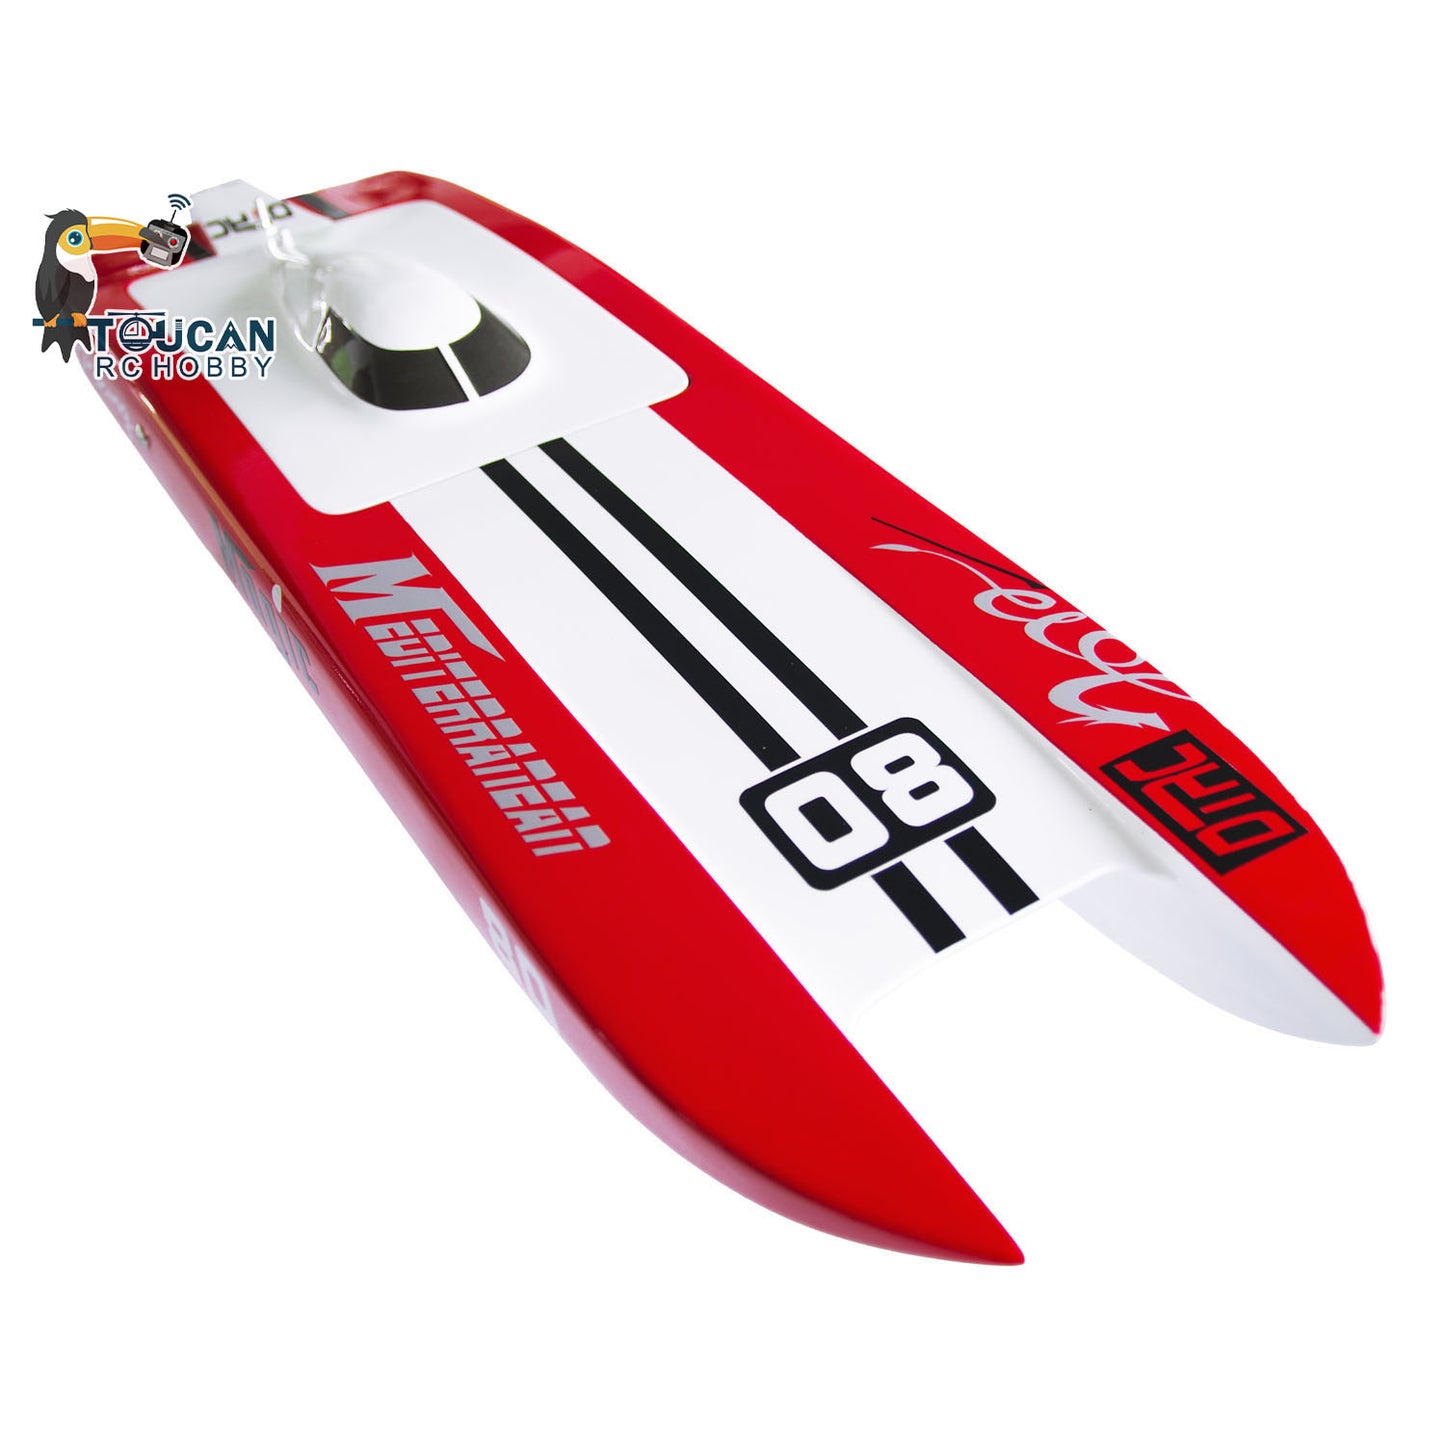 E32 Prepainted Fiber Glass Catamaran Electric Racing KIT RC Boat Hull for Advanced Player DIY Model Adult Toy Gift 785*235*115mm